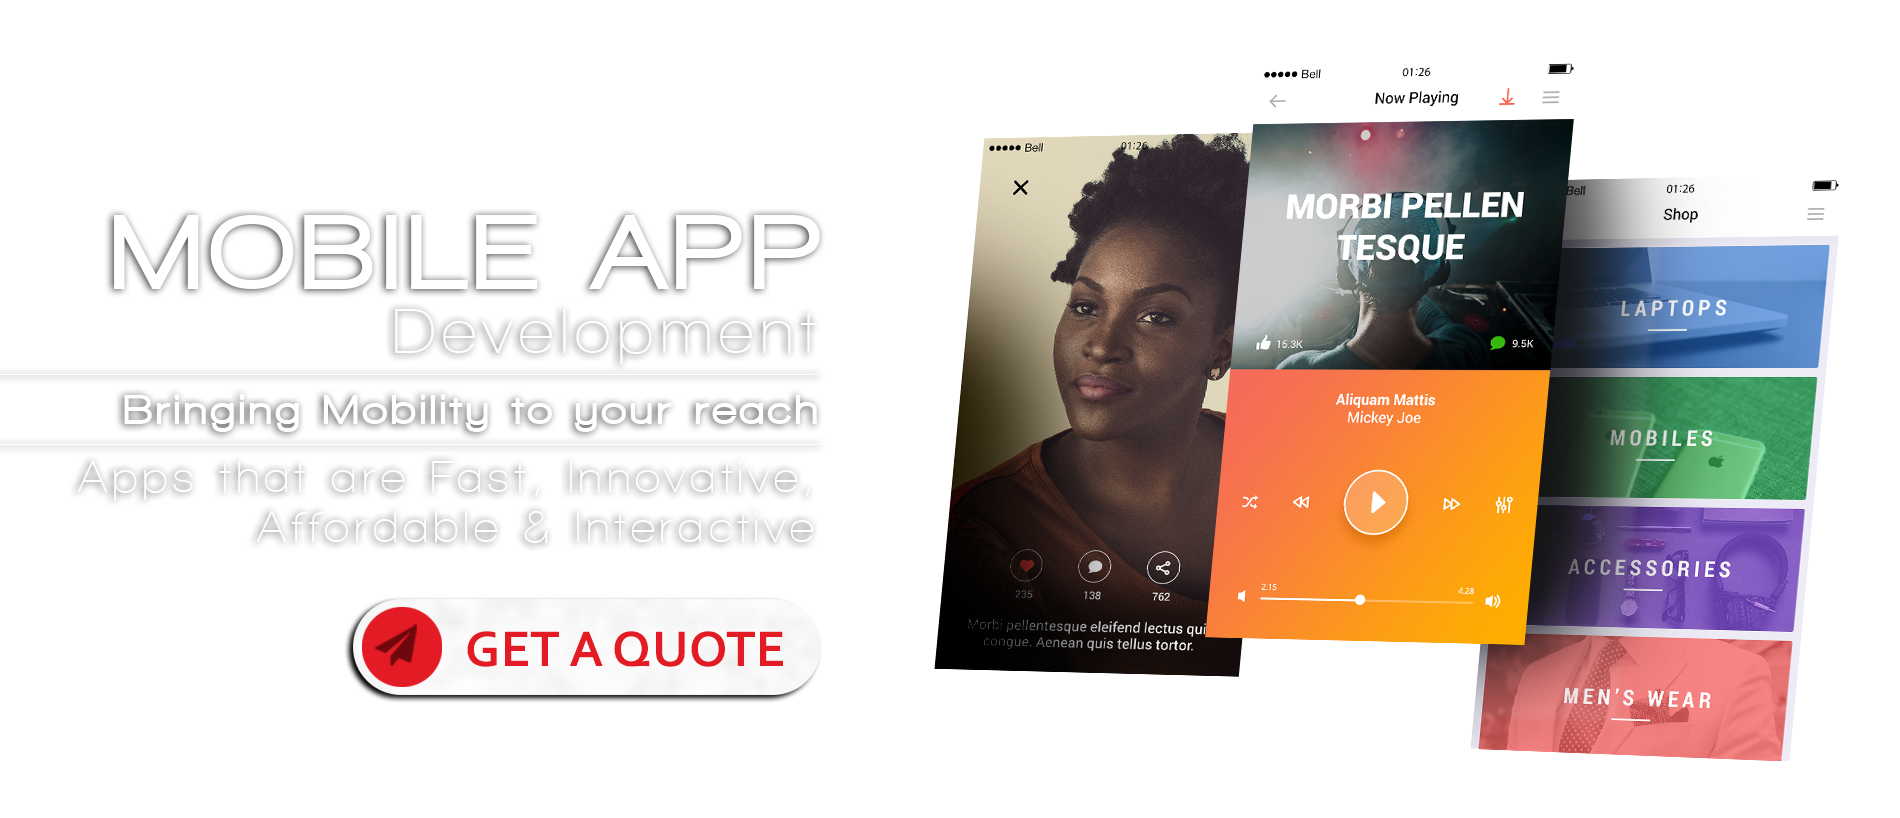 Mobile apps development services